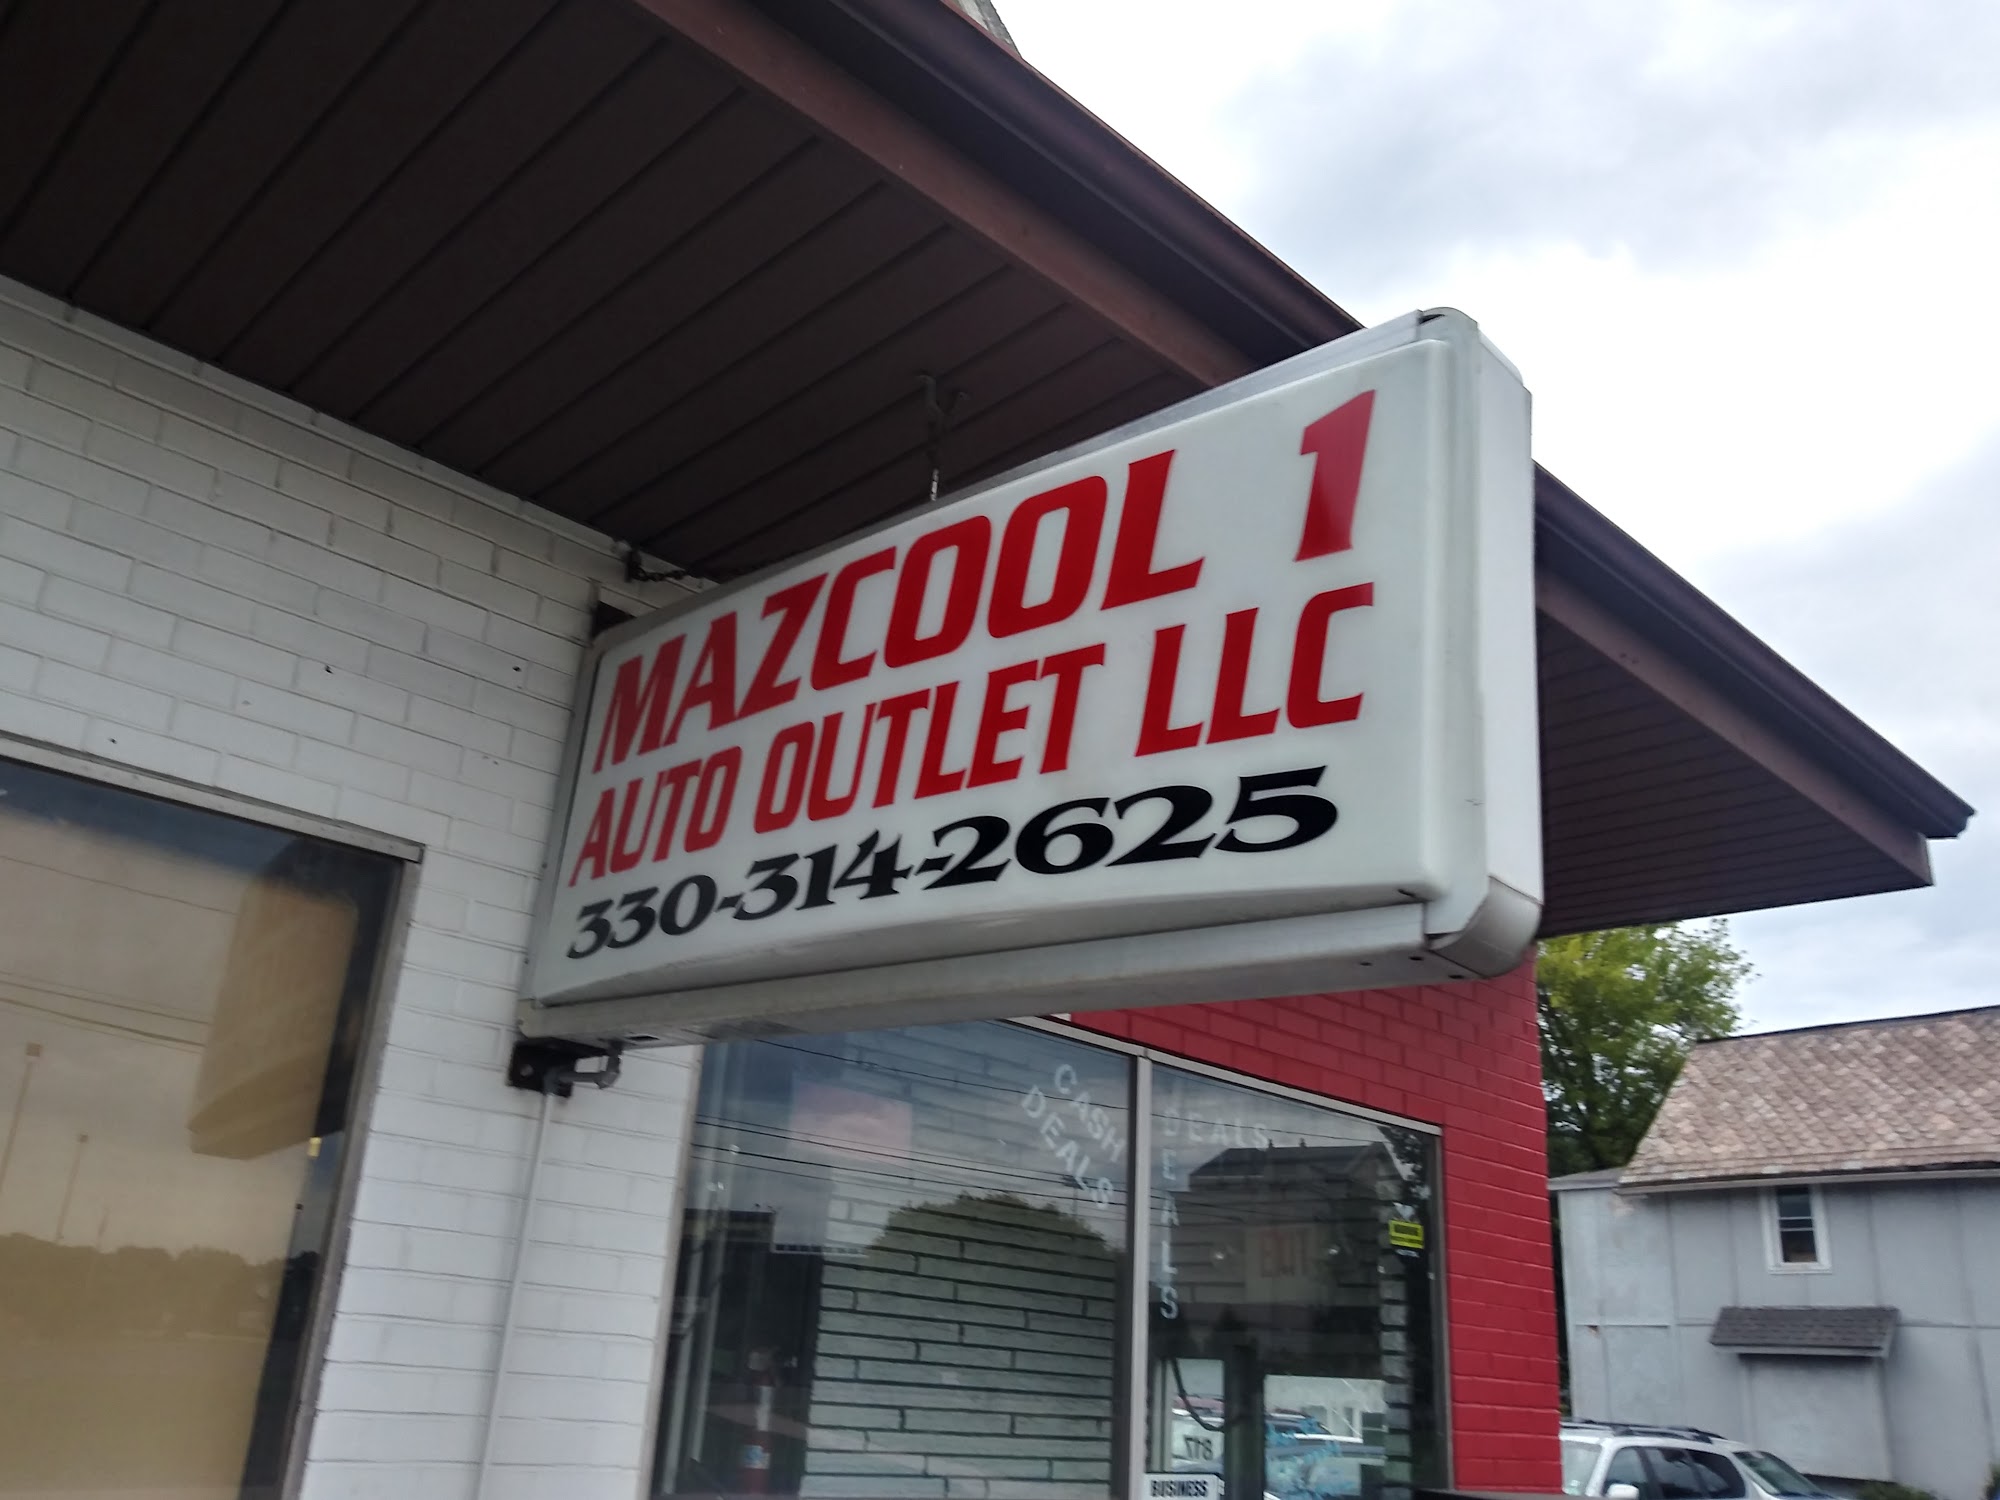 Mazcool 1 LLC Auto Outlet